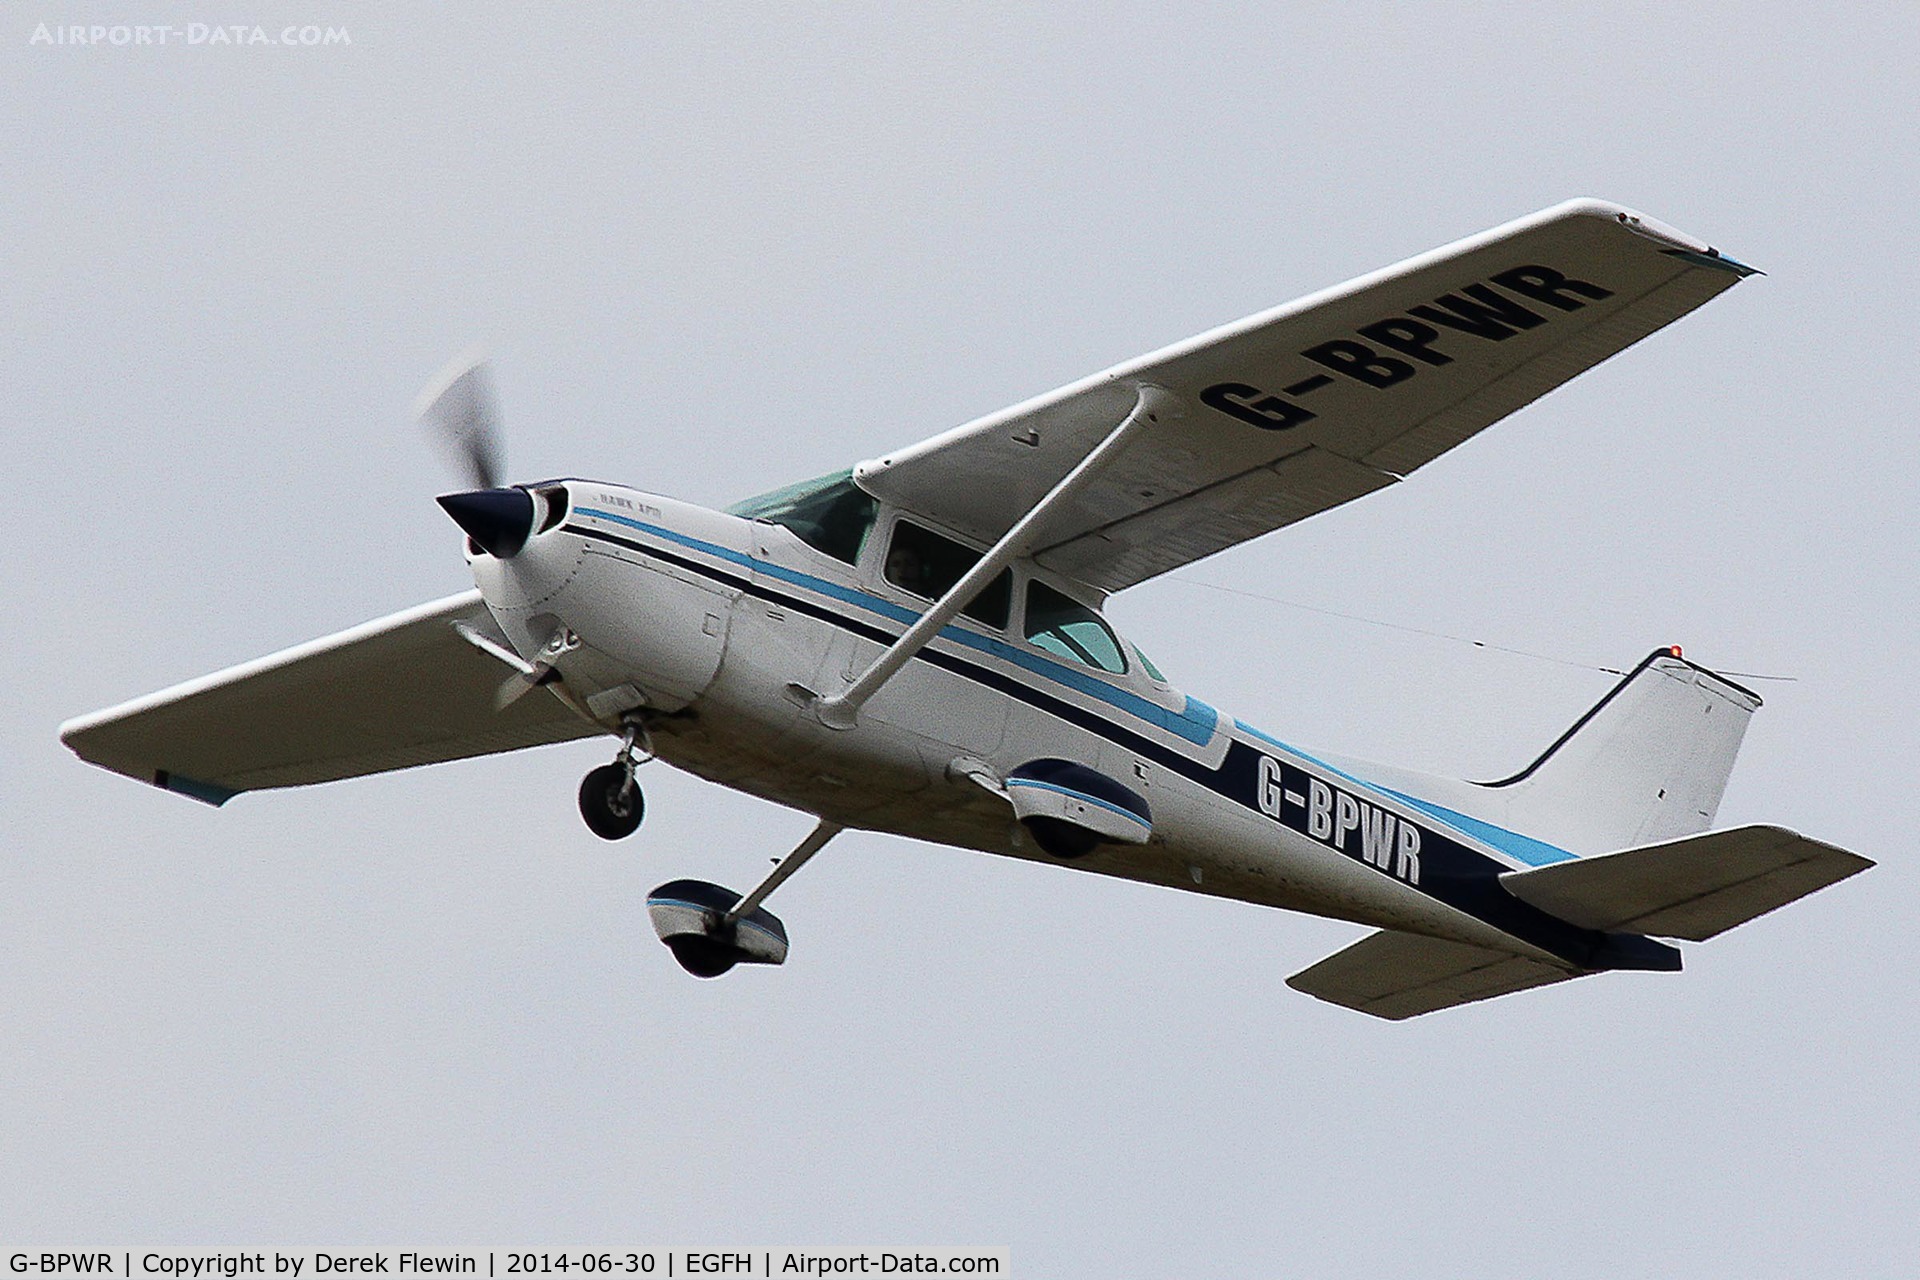 G-BPWR, 1979 Cessna R172K Hawk XP C/N R172-2953, EGFE resident Hawk XP, seen departing runway 22 at EGFH.